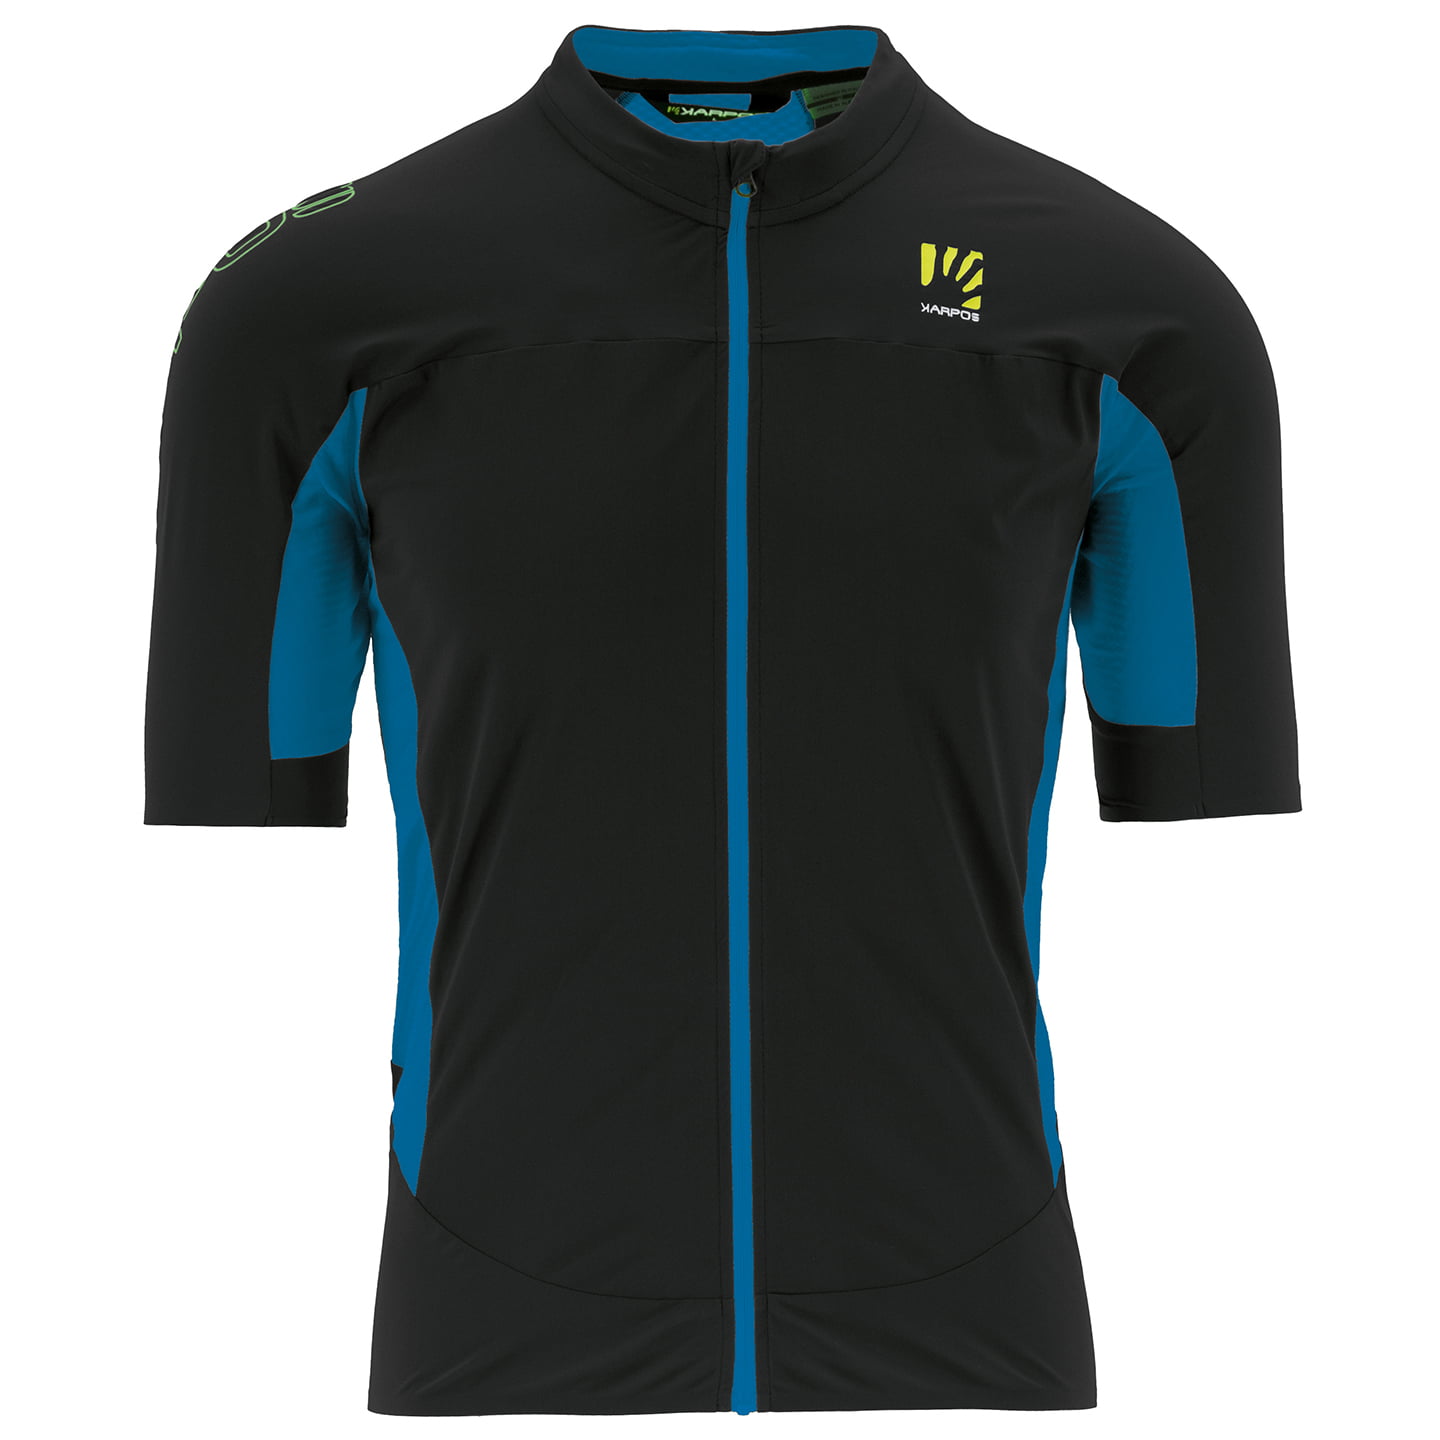 KARPOS Pralongia Short Sleeve Jersey, for men, size 2XL, Cycling jersey, Cycle clothing